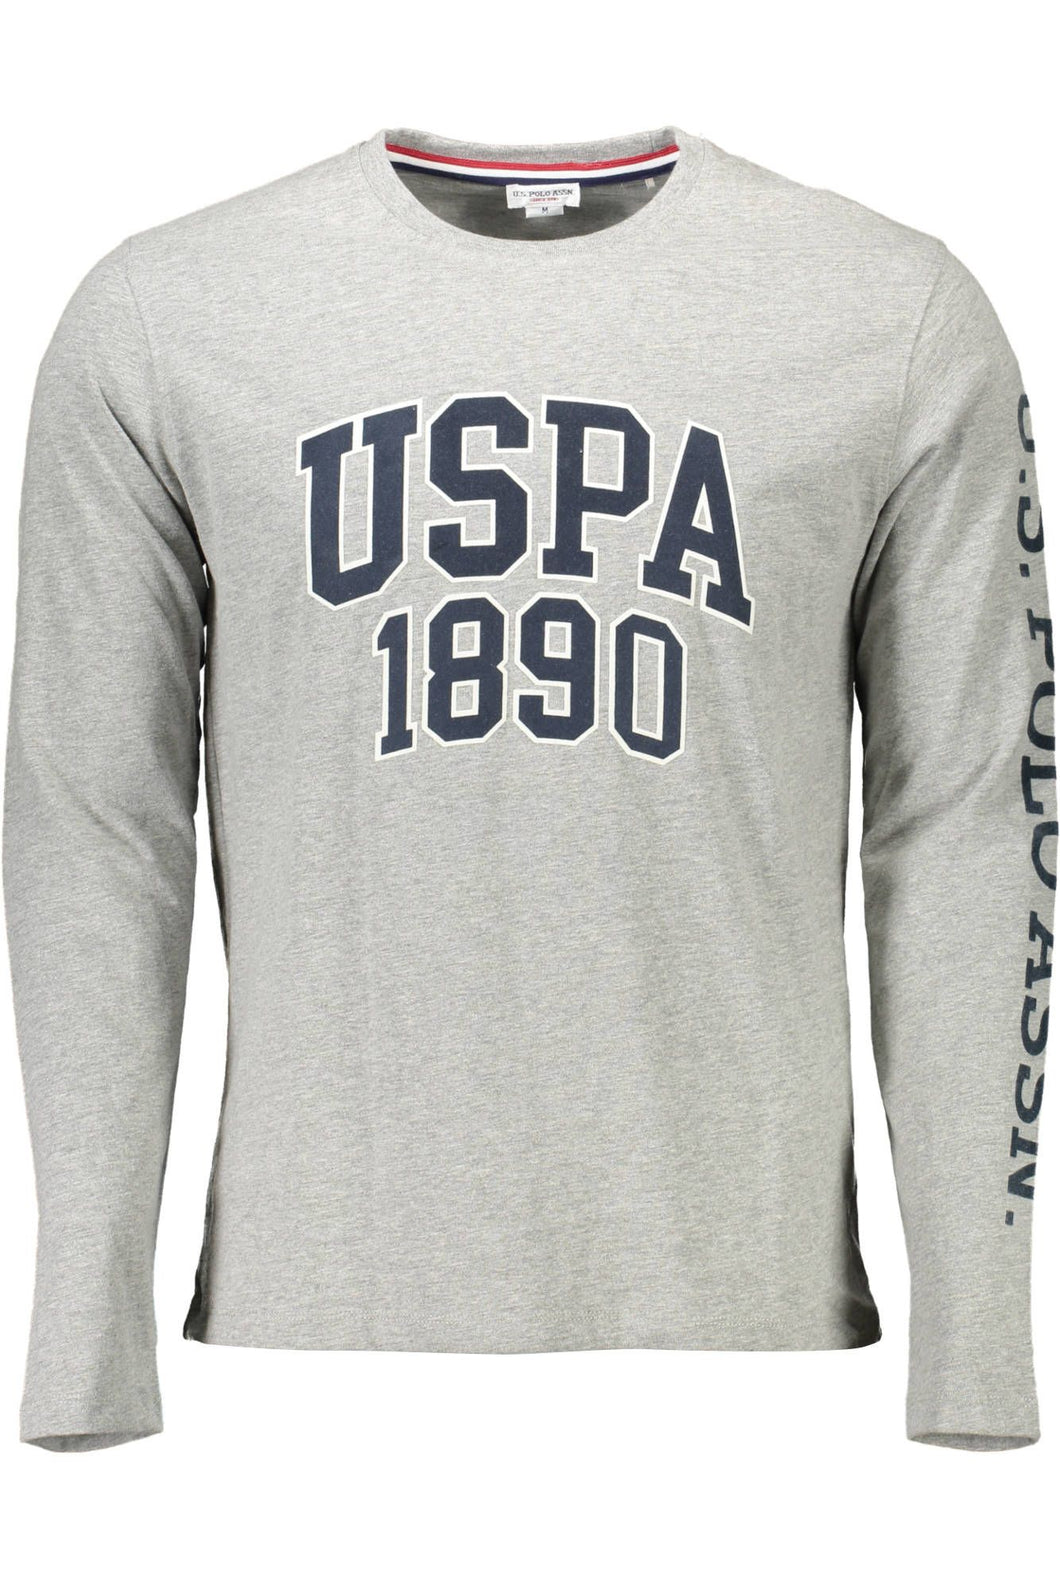 U.S. POLO ASSN. Gray Cotton T-Shirt